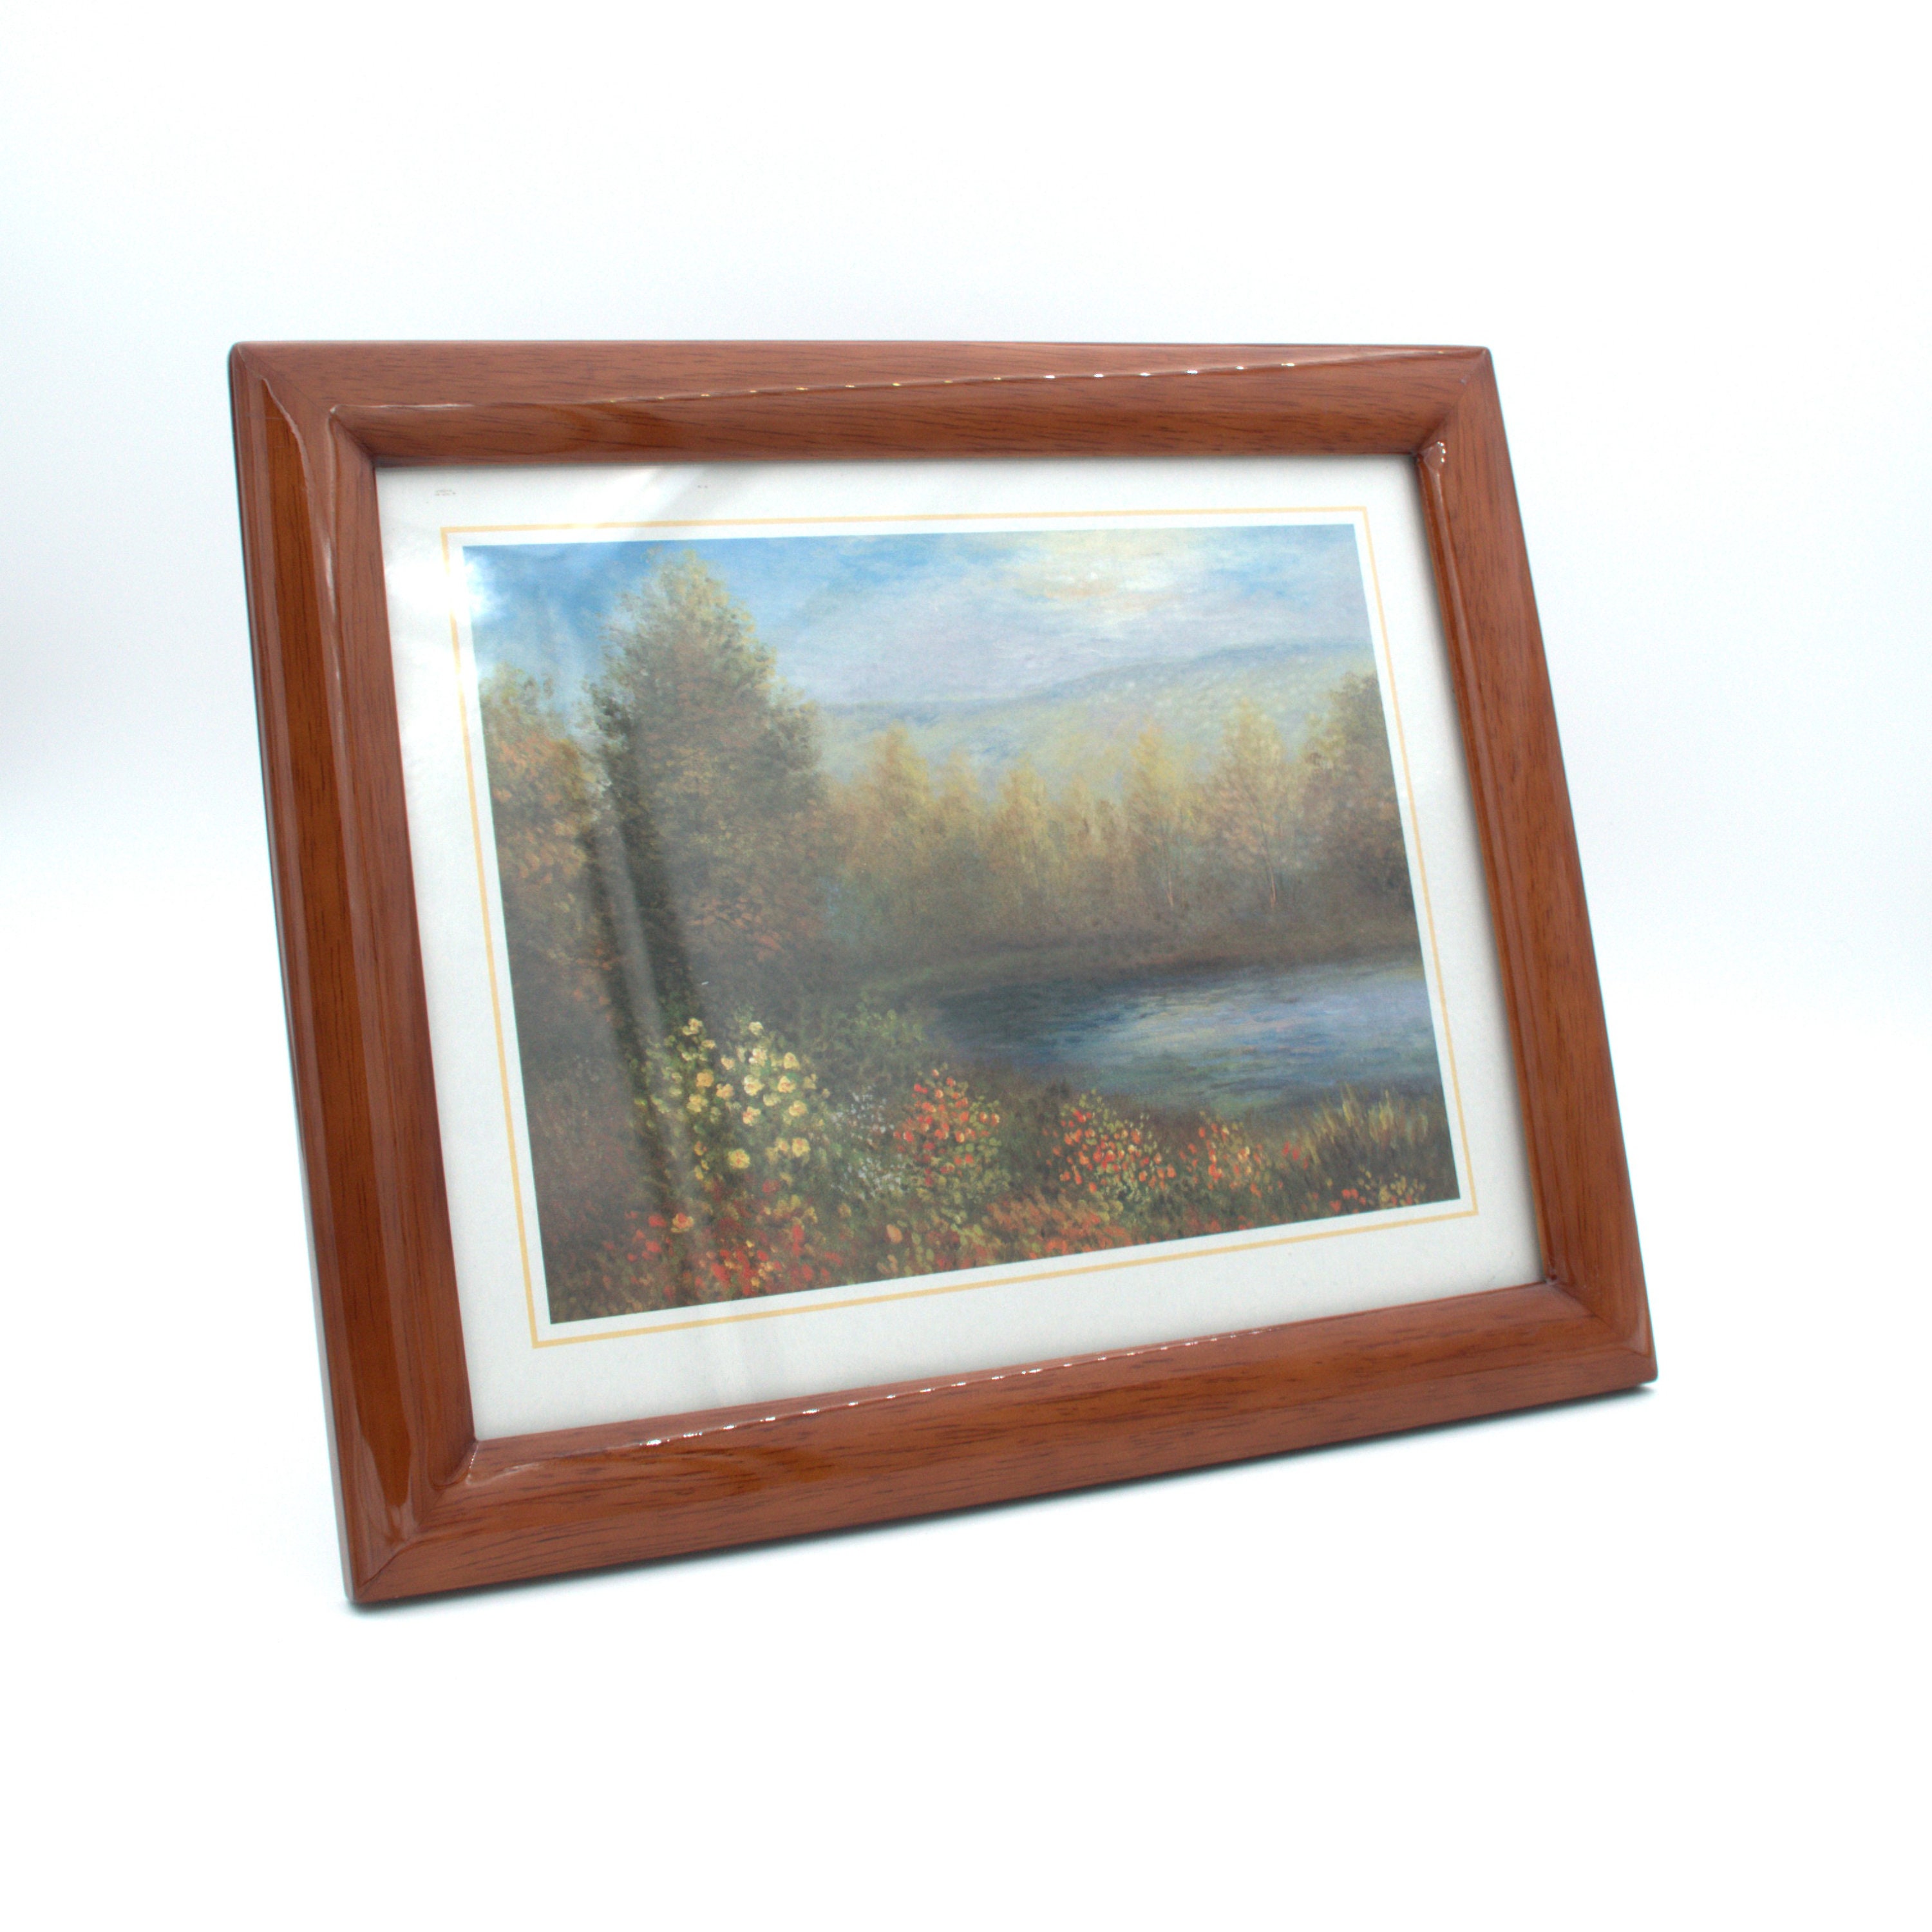 Wooden Handcrafted Mirror Frames Handmade Buy 1 Get 1 Free Engraved Teak  Wood Distressed Rustic Yellow Color 